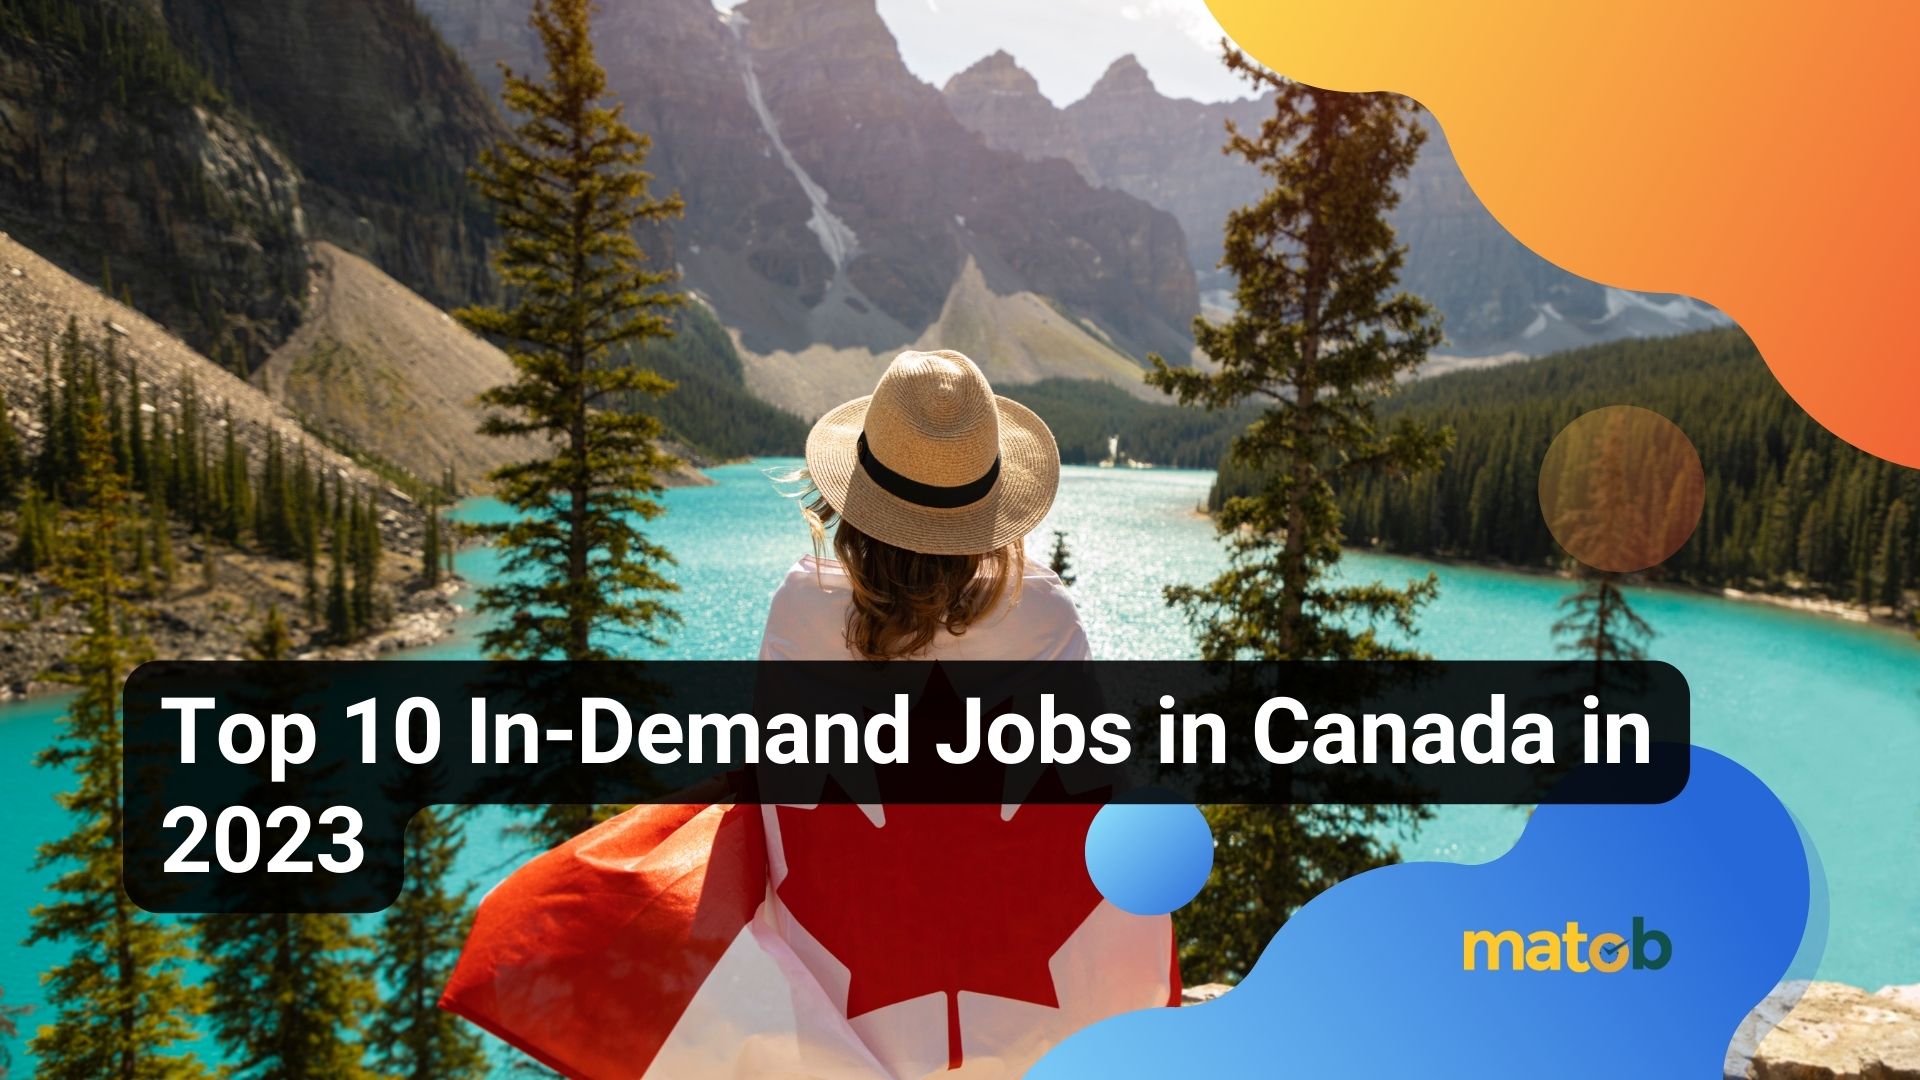 Top 10 In-Demand Jobs in Canada in 2023